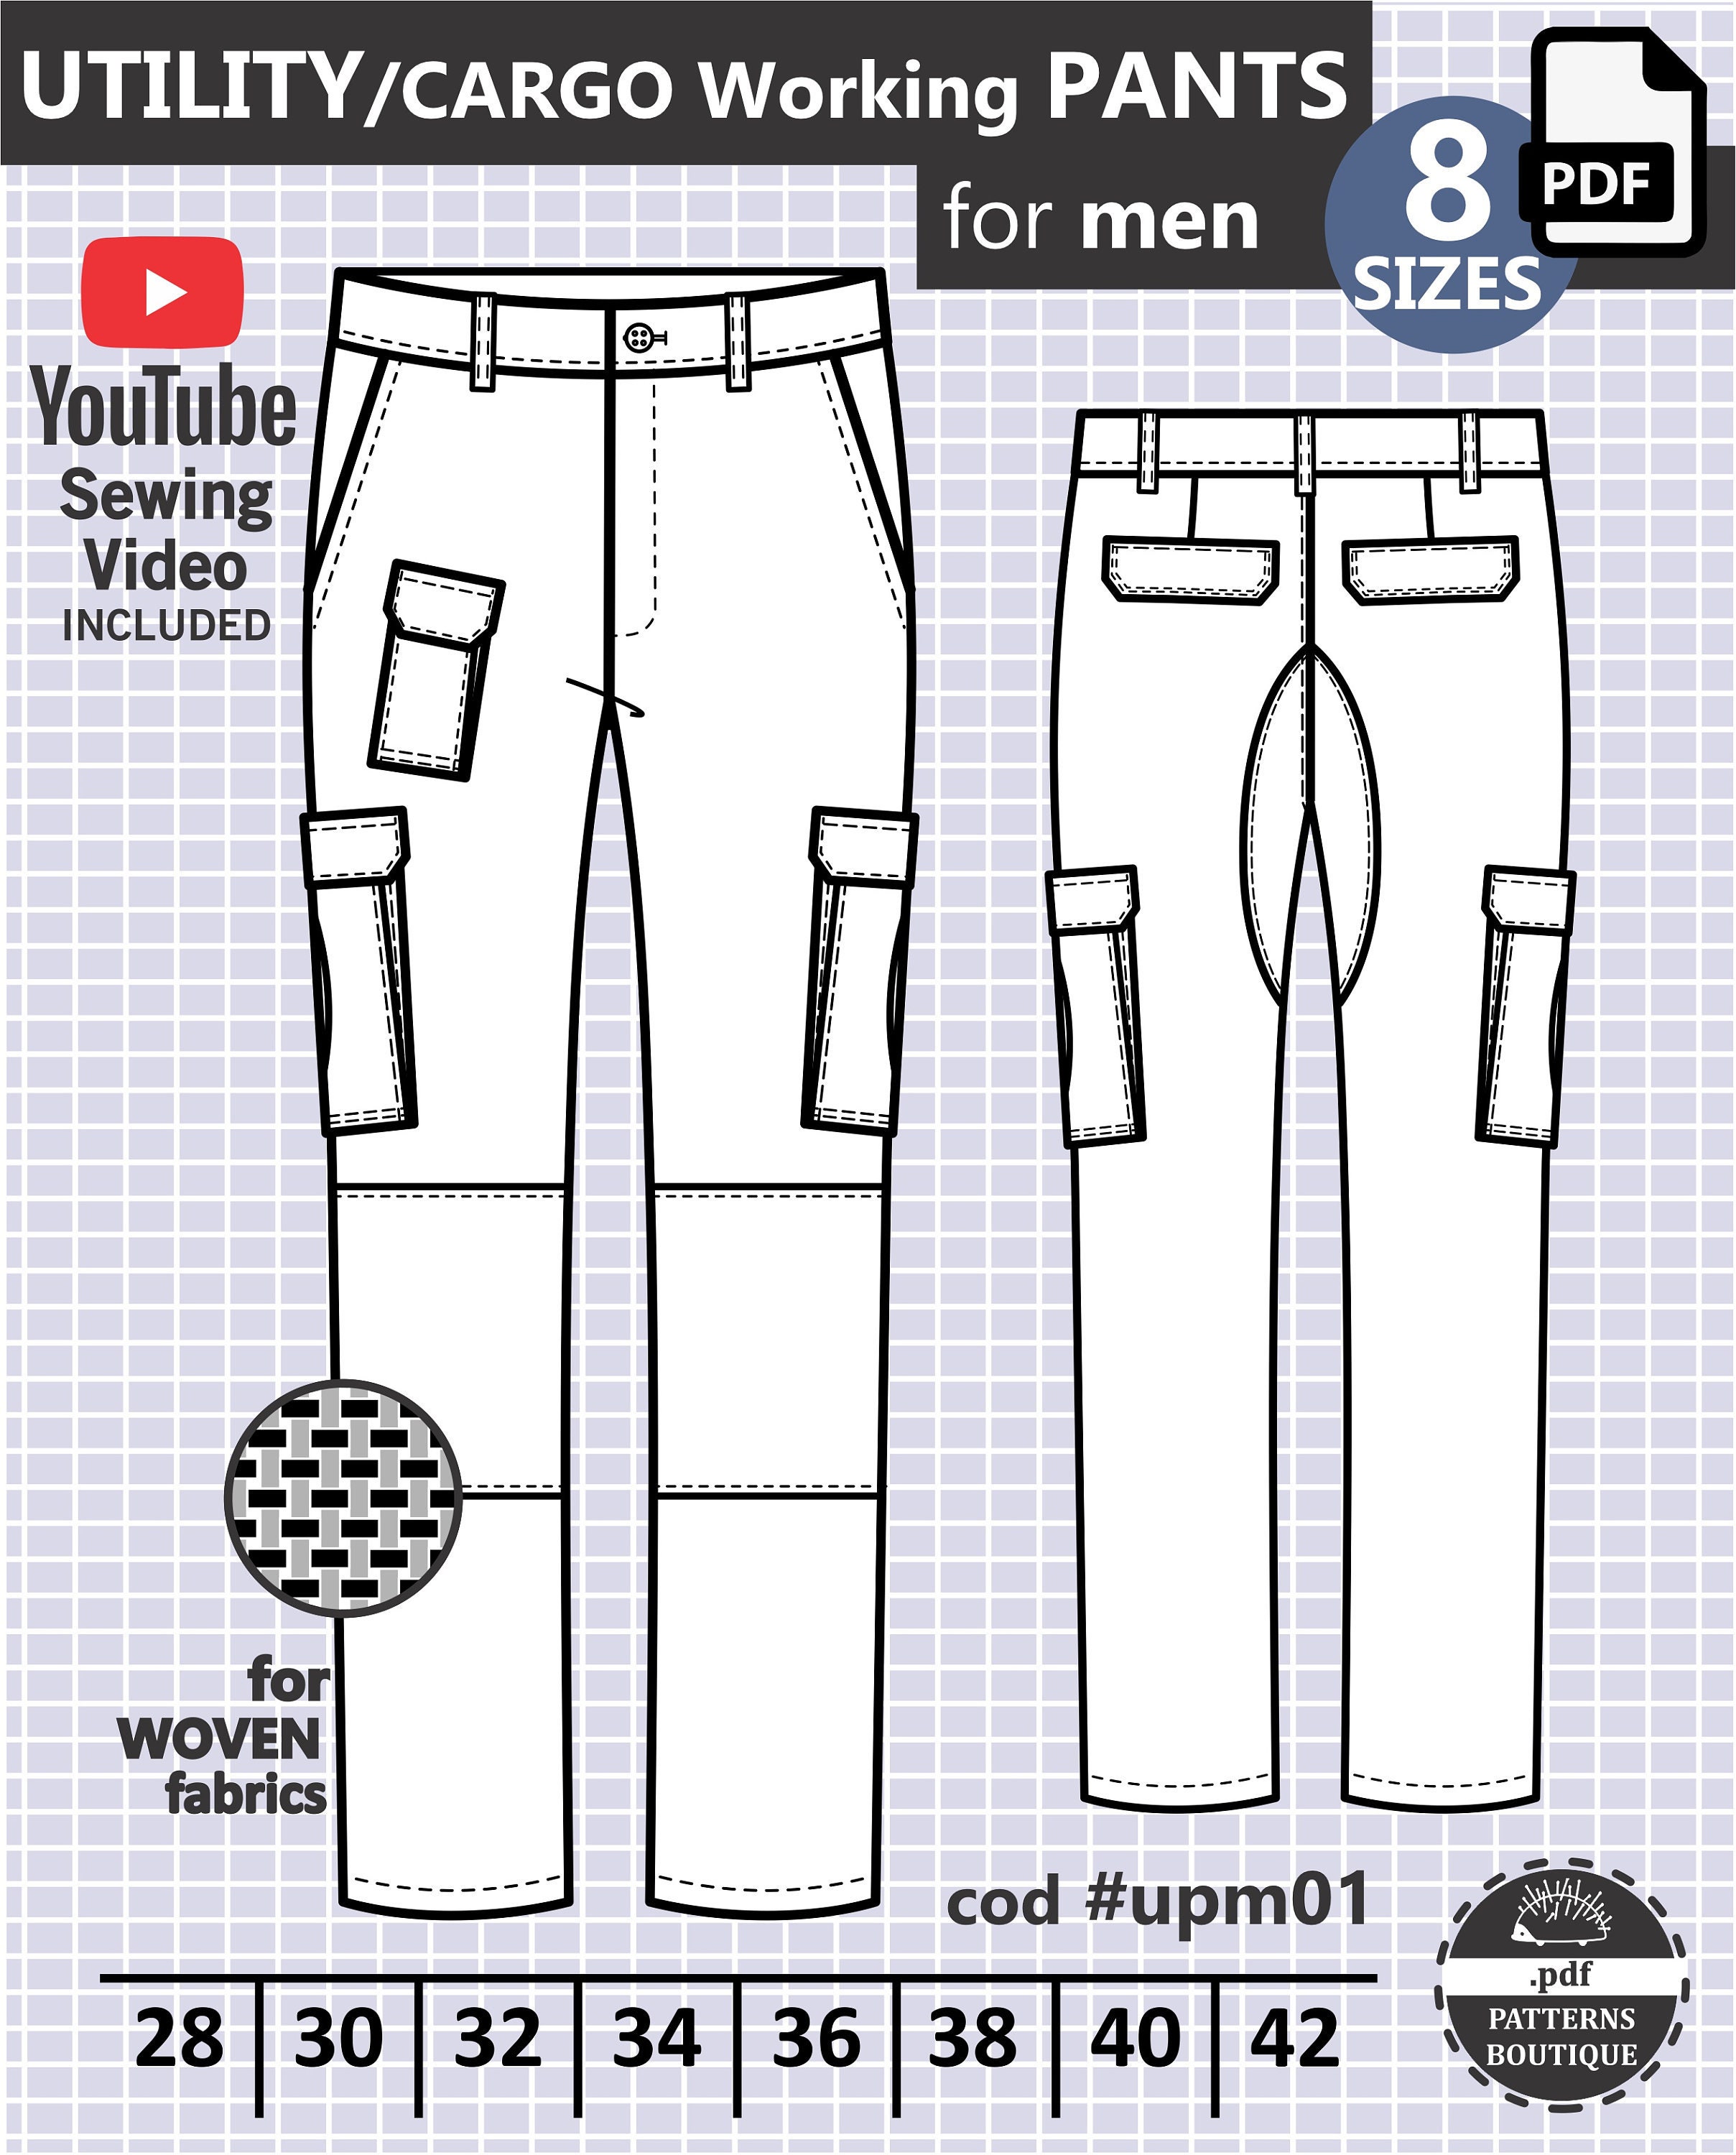 Men's Cargo Pants Casual Multi Pockets Military Tactical Pants Men  Outerwear Army Straight Slacks Long Trousers Men Clothes